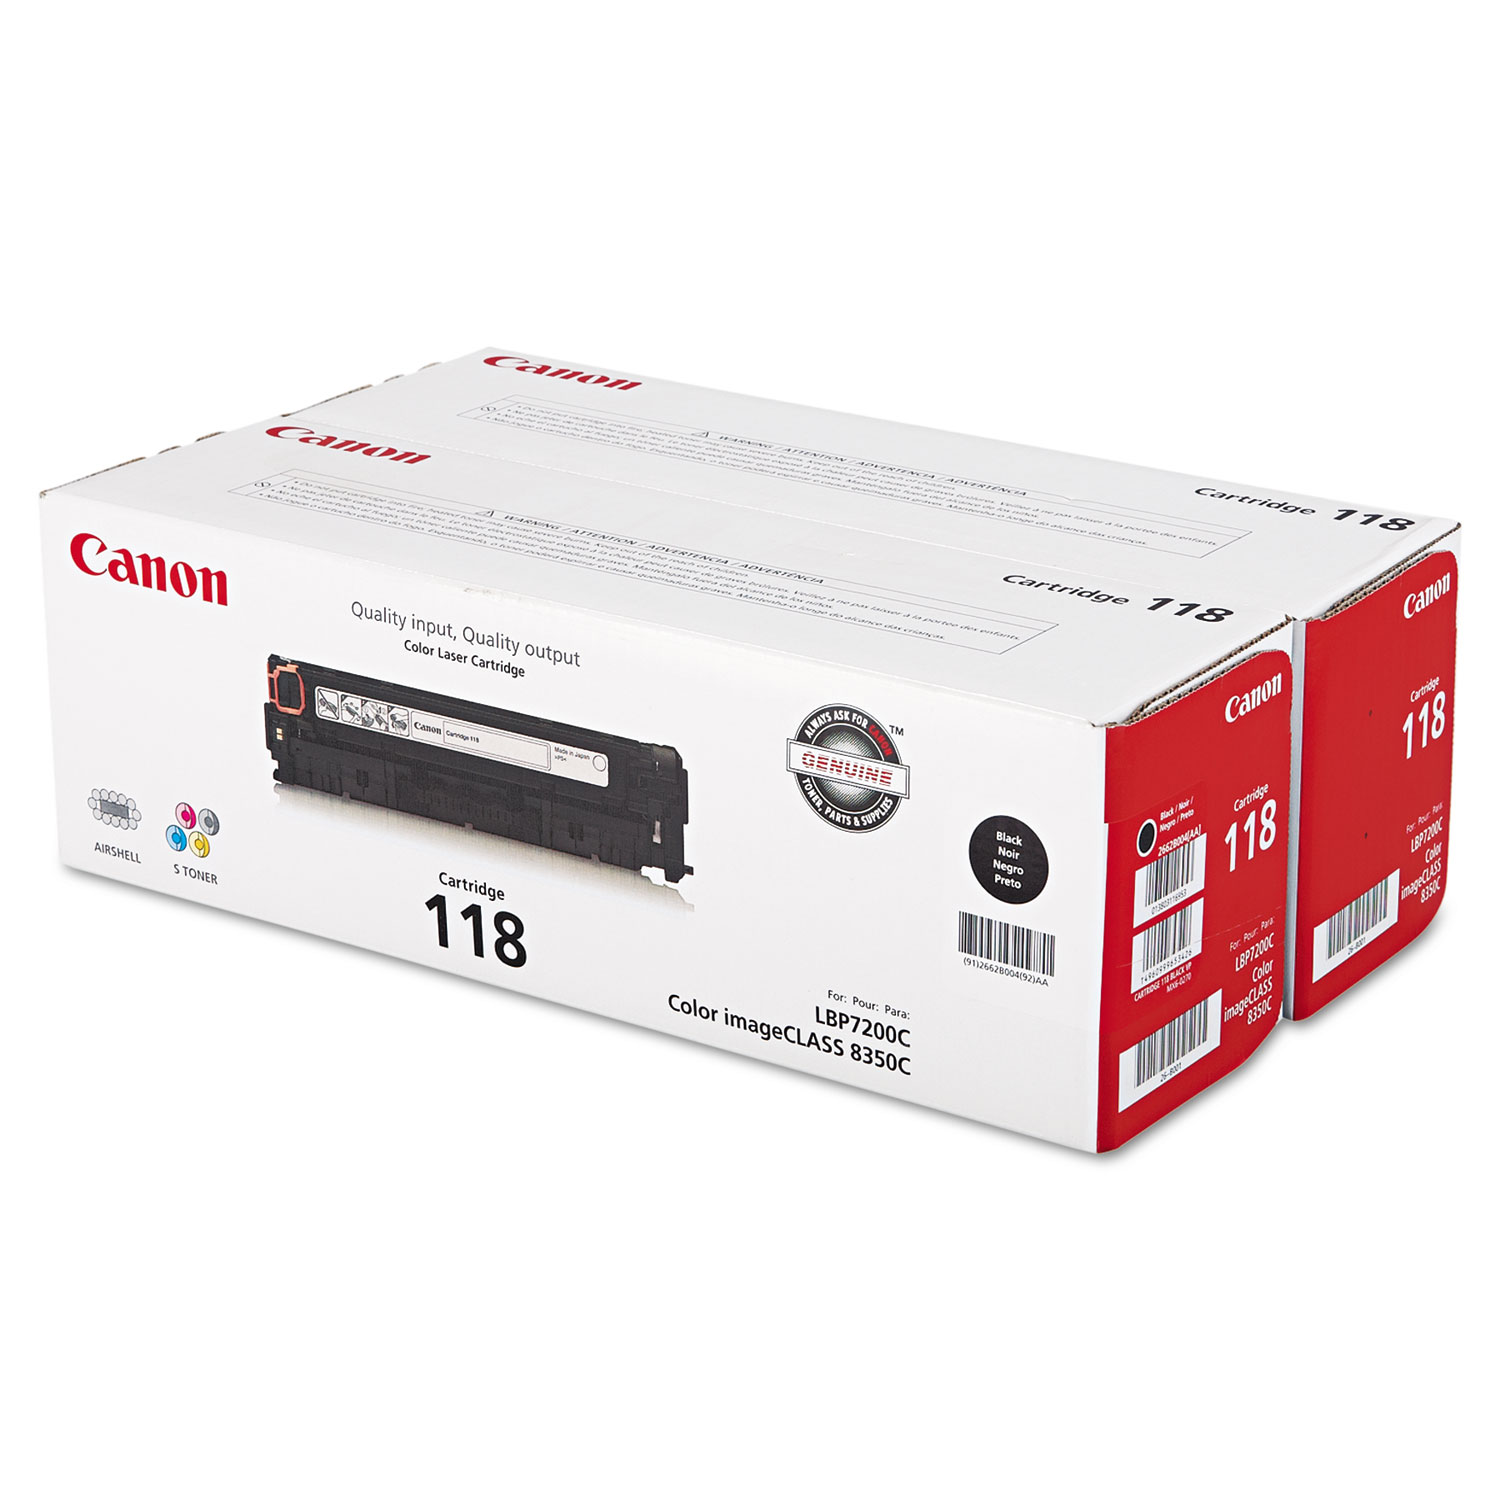  Canon 2662B004 2662B004 (118) Toner, Black, 2/Pack (CNM2662B004) 